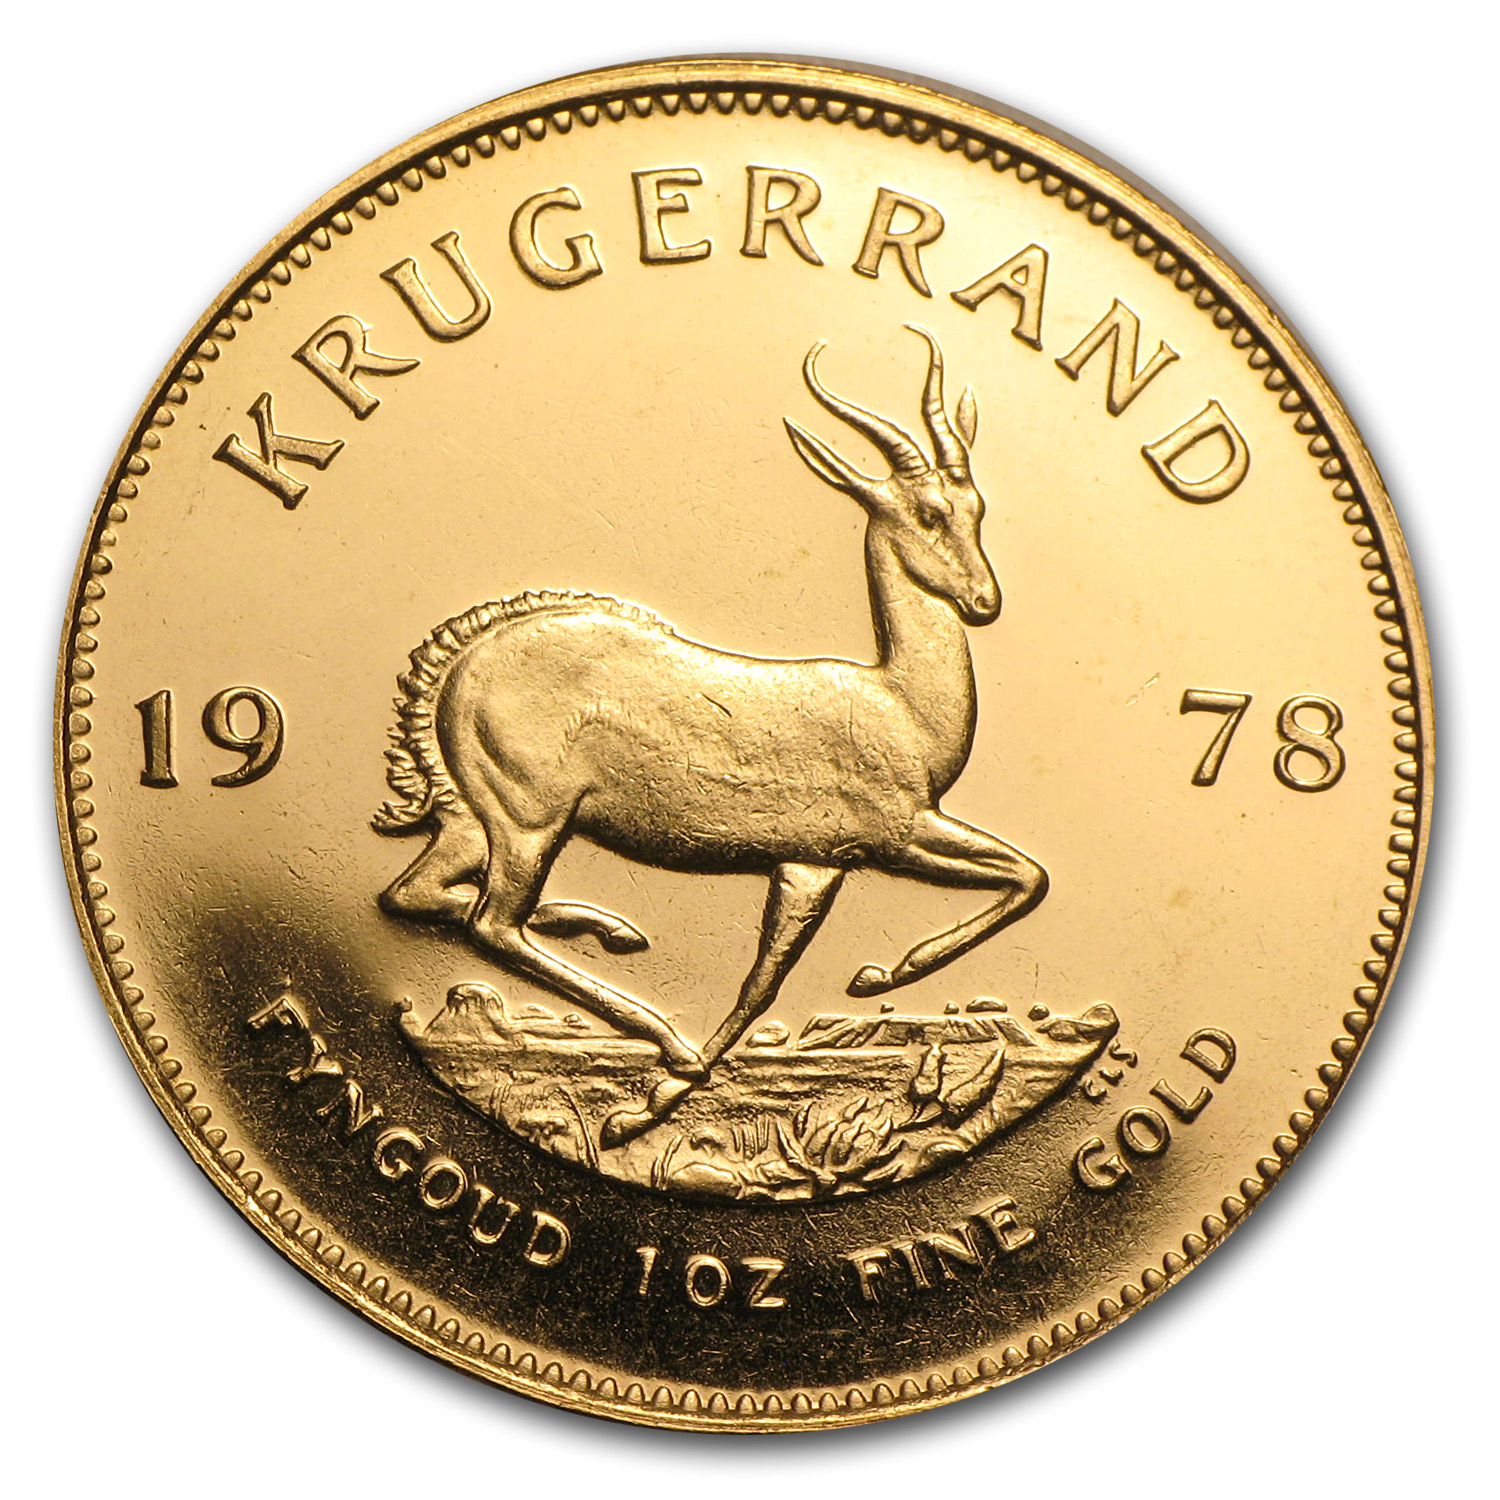 Buy 1978 South Africa 1 oz Gold Krugerrand BU - Click Image to Close